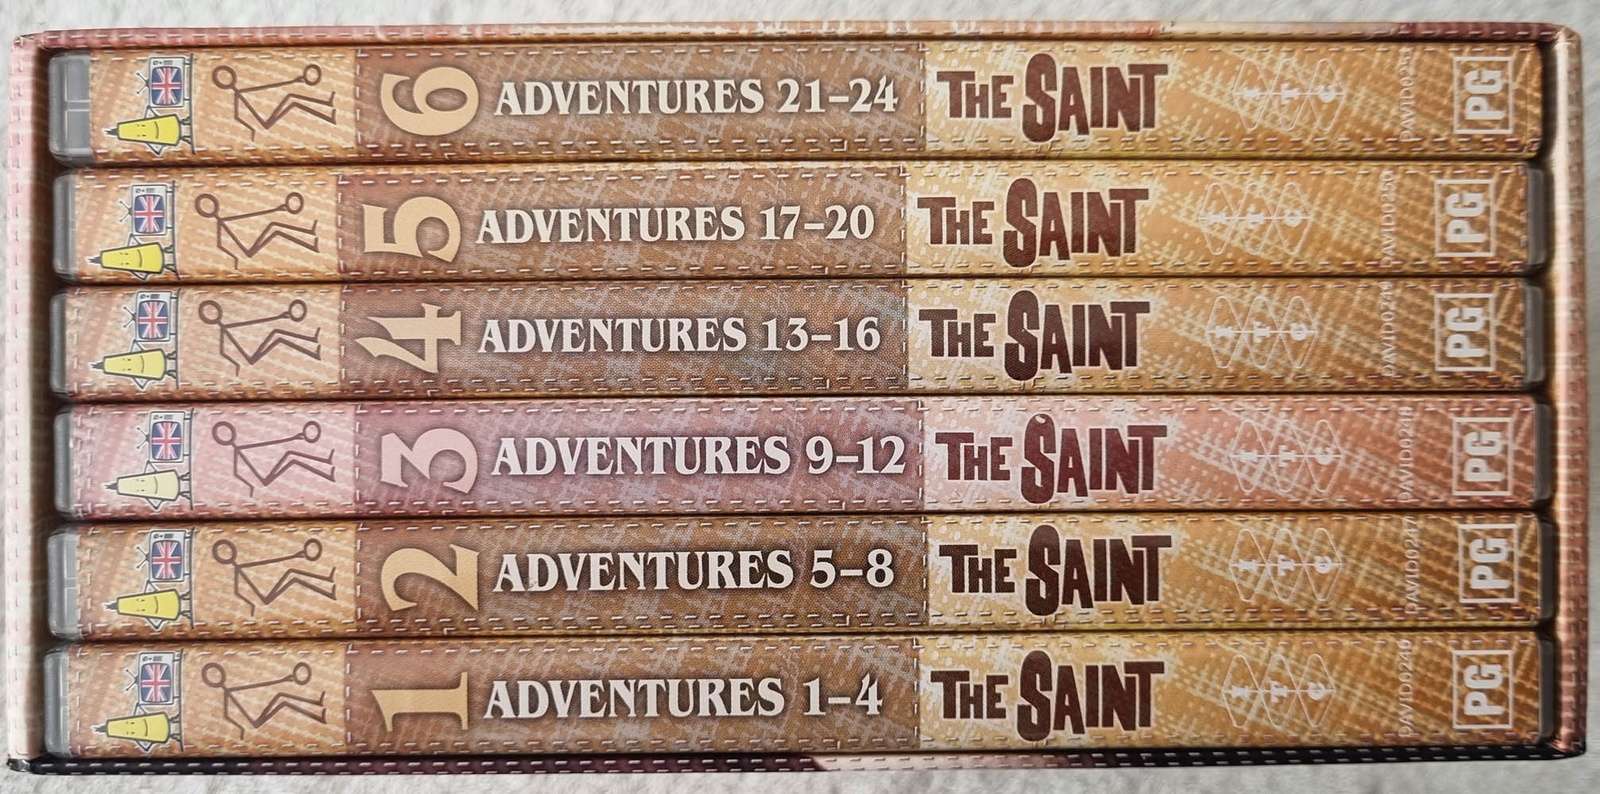 The Saint - Set 1 (DVD)